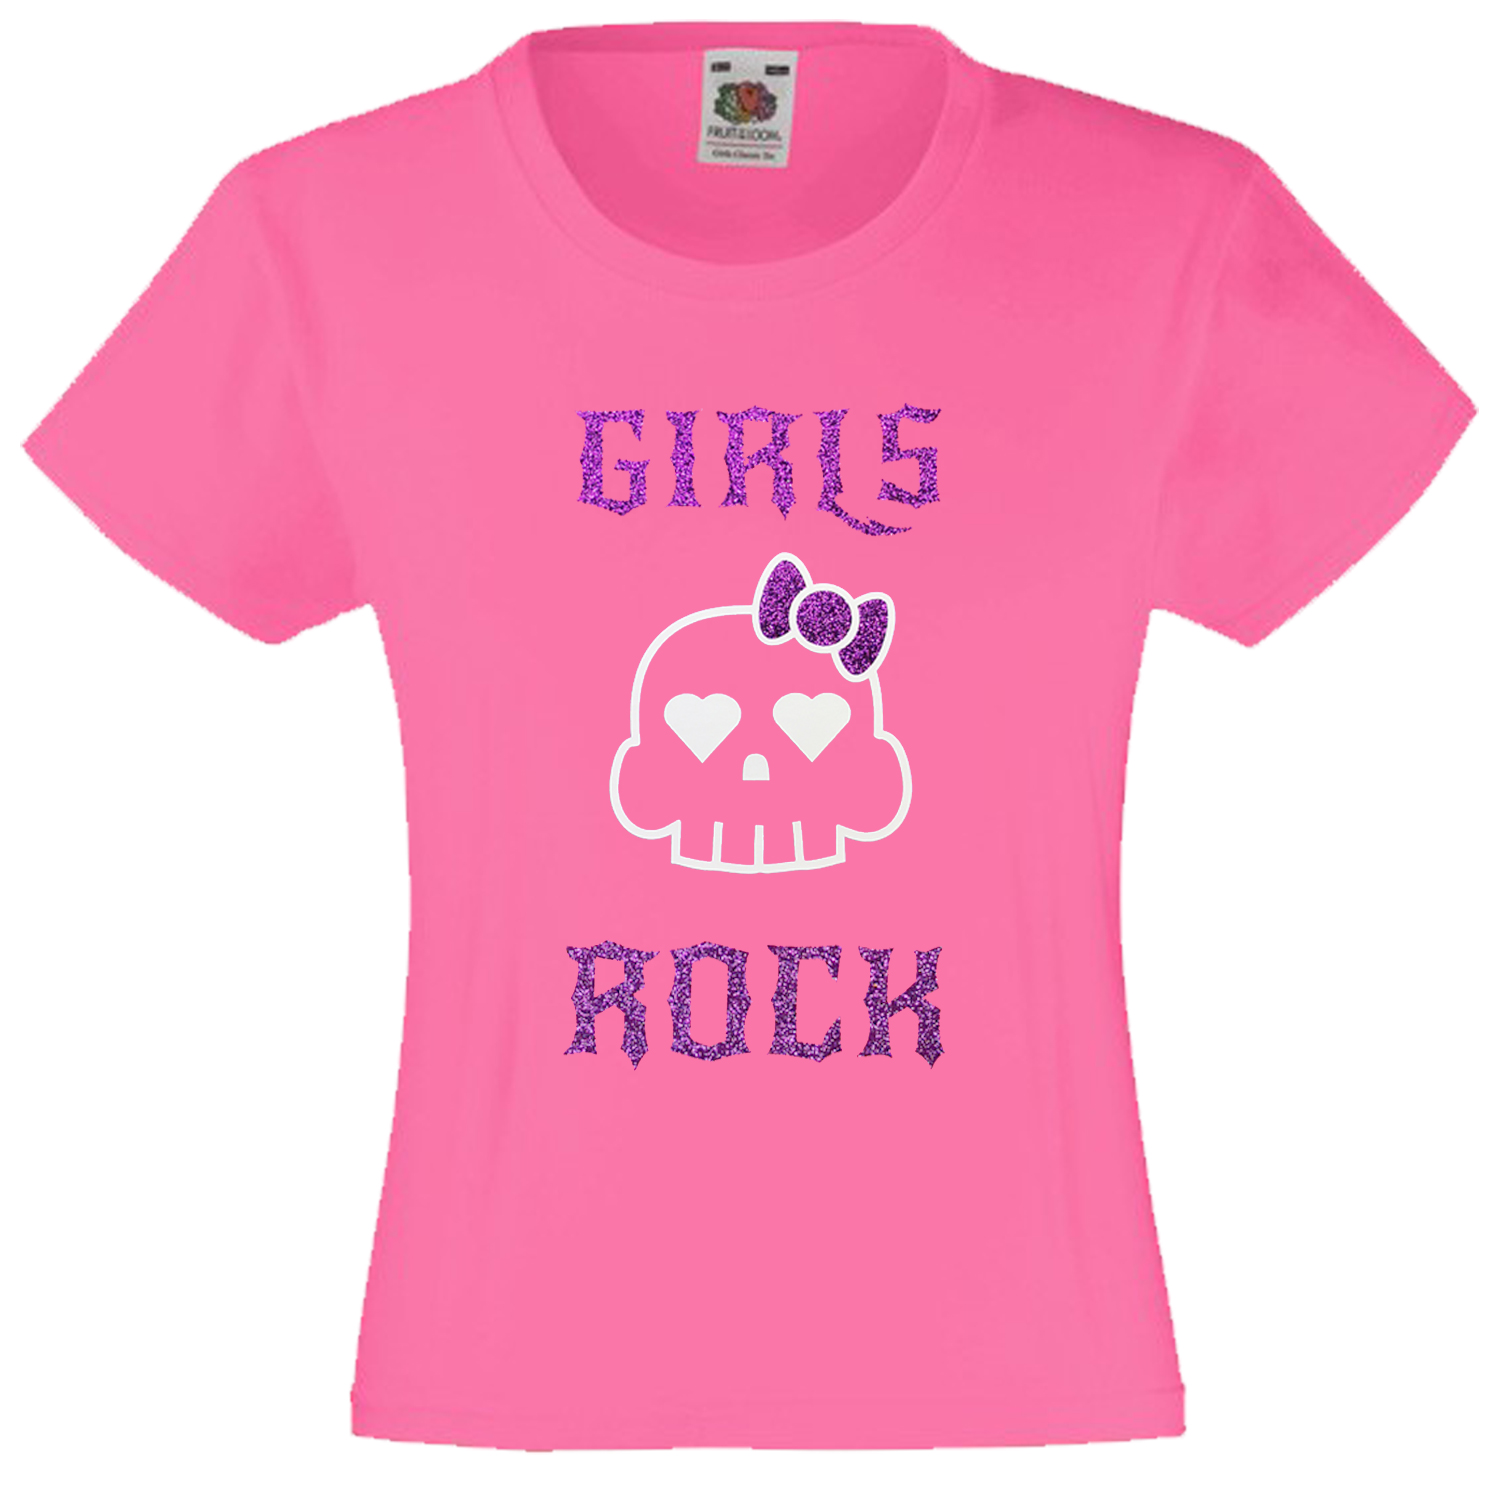 Kids Girls Rock T Shirt Glitter Skull Festival Heavy Metal Grunge Punk ...